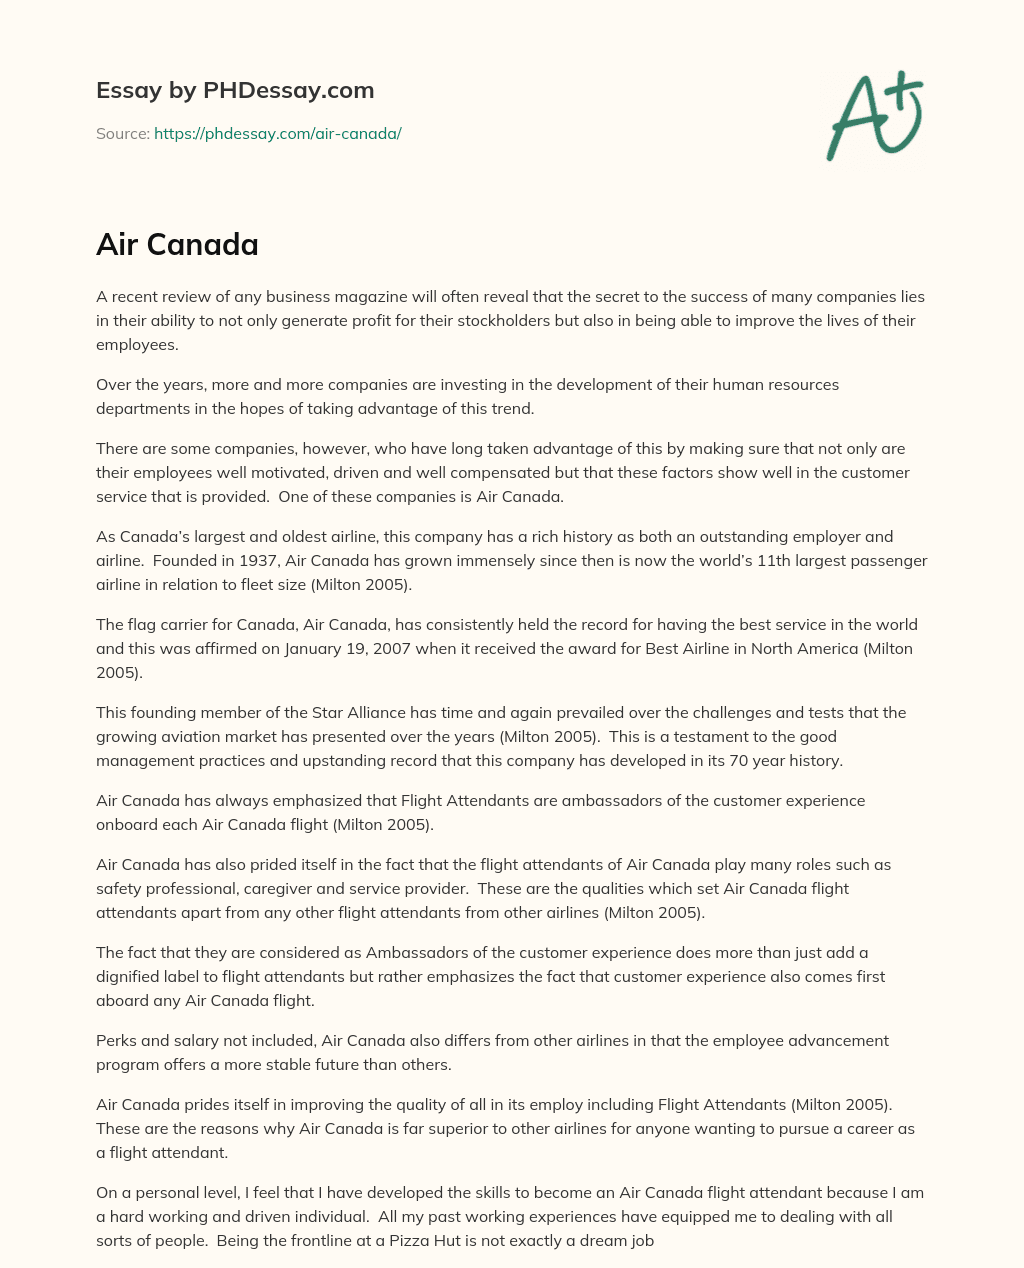 Air Canada essay